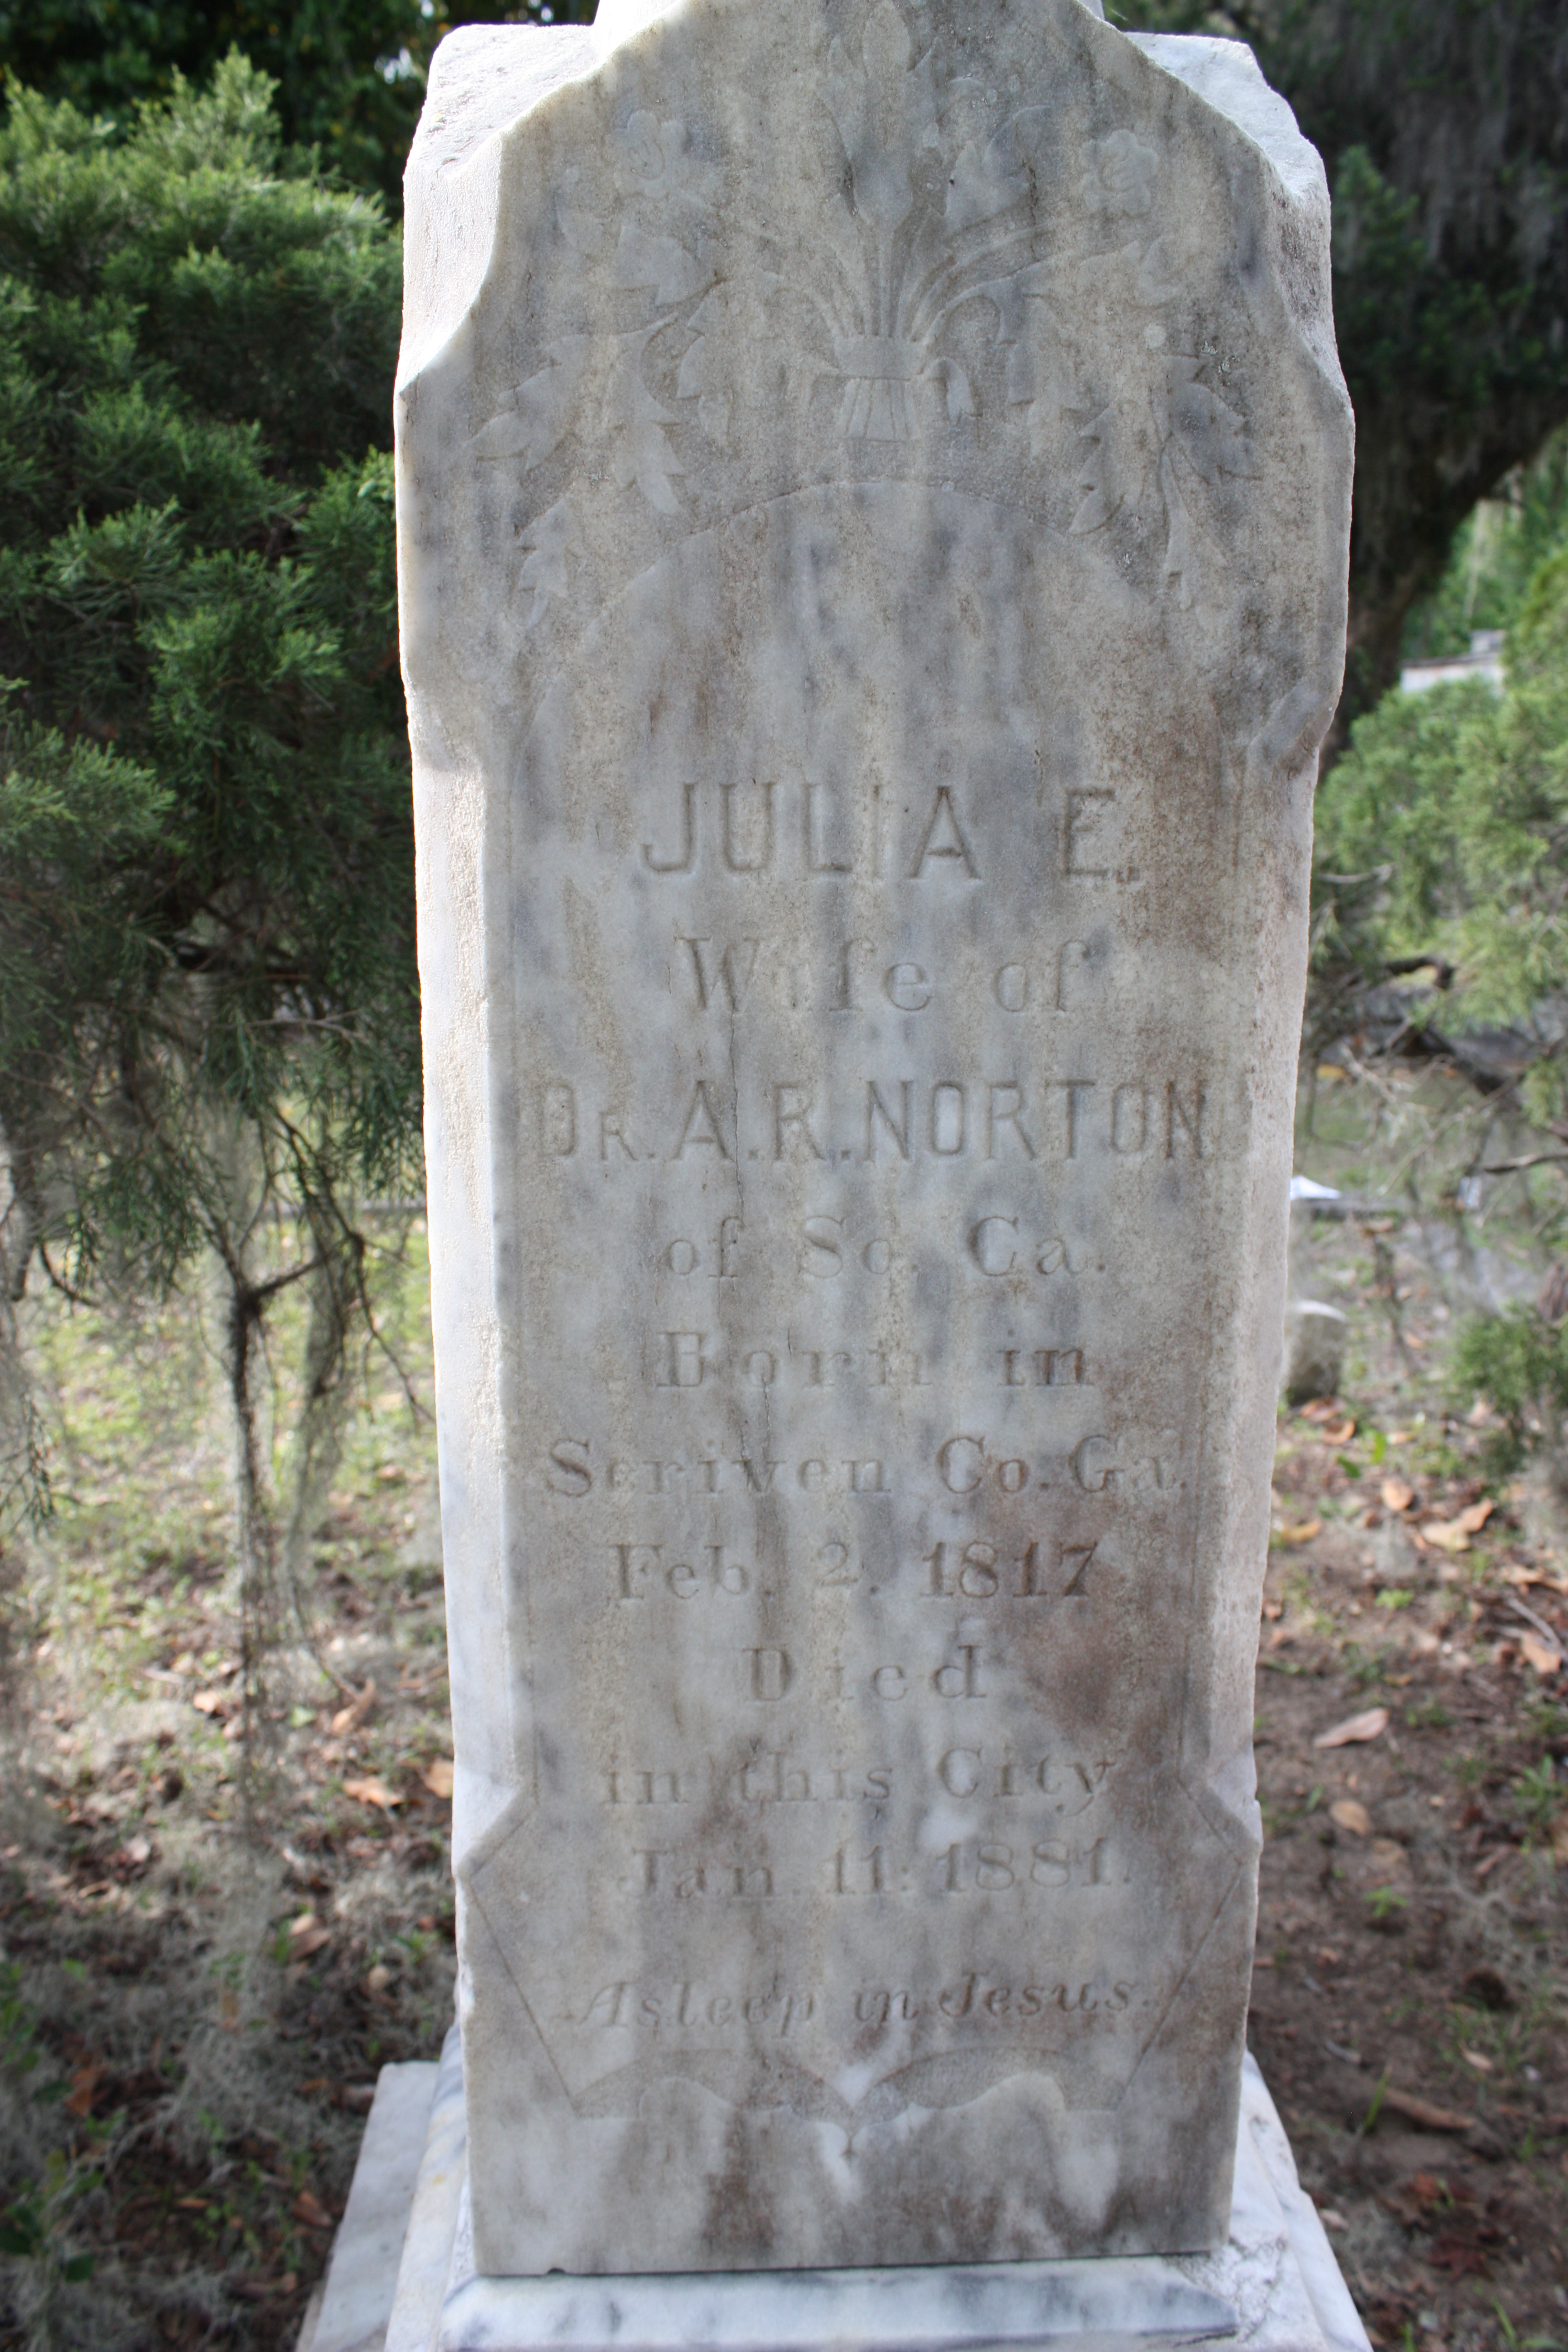 Grave of Julia Elizabeth Greene Norton, 1817-1888, Laurel Grove Cemetery, Savannah Georgia.